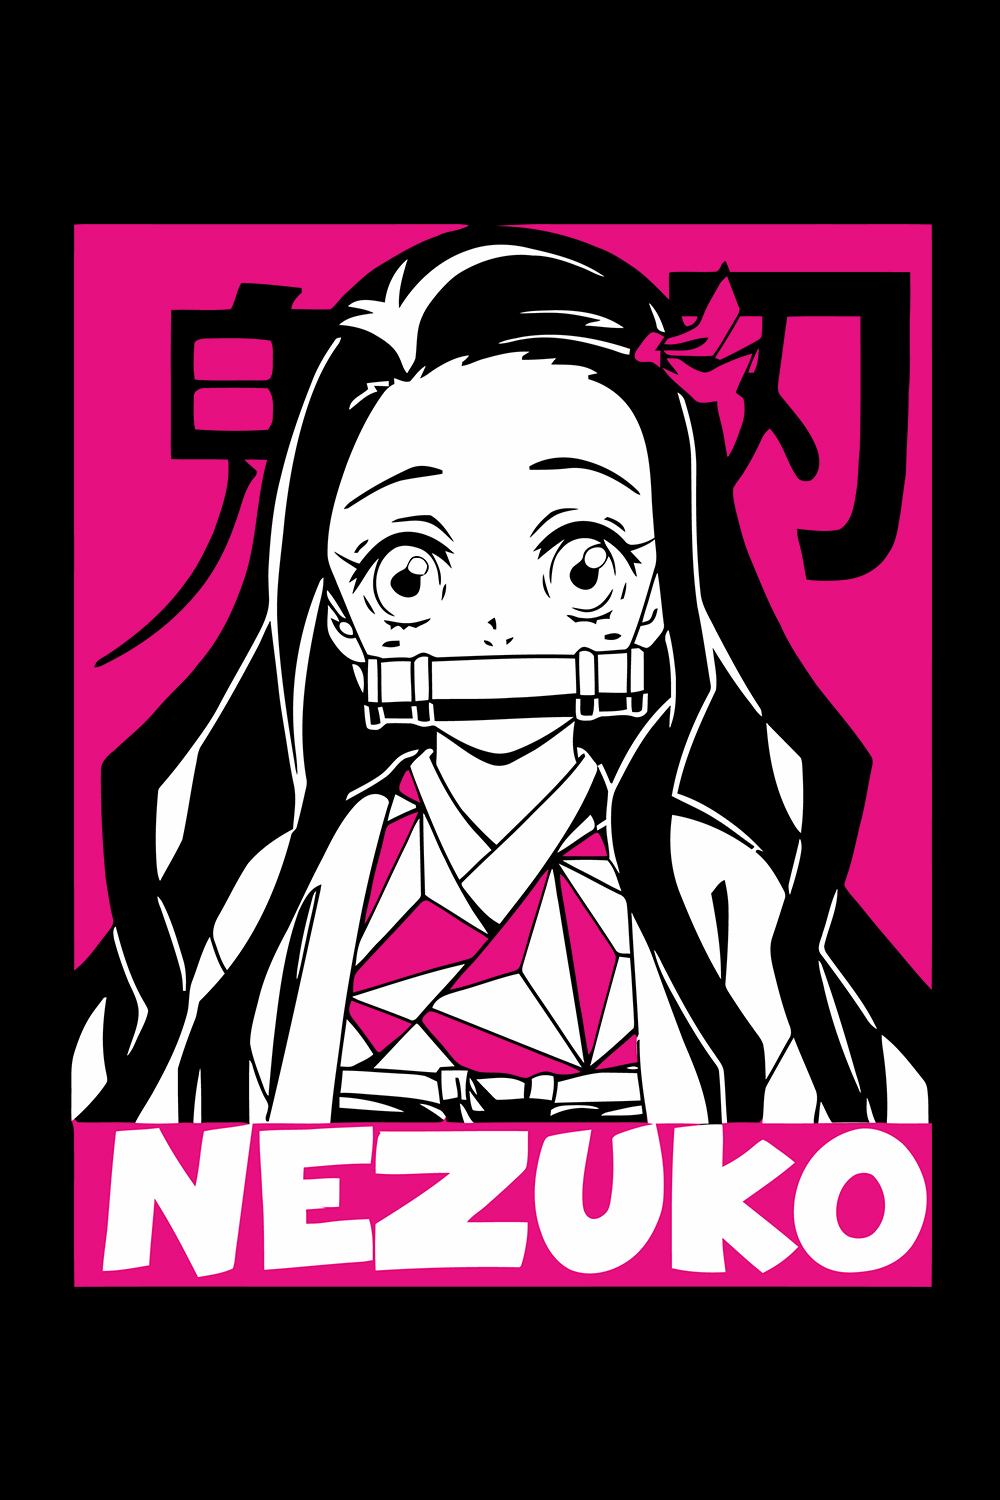 Demon Slayer Nezuko Kamado Anime t-shirt design pinterest preview image.